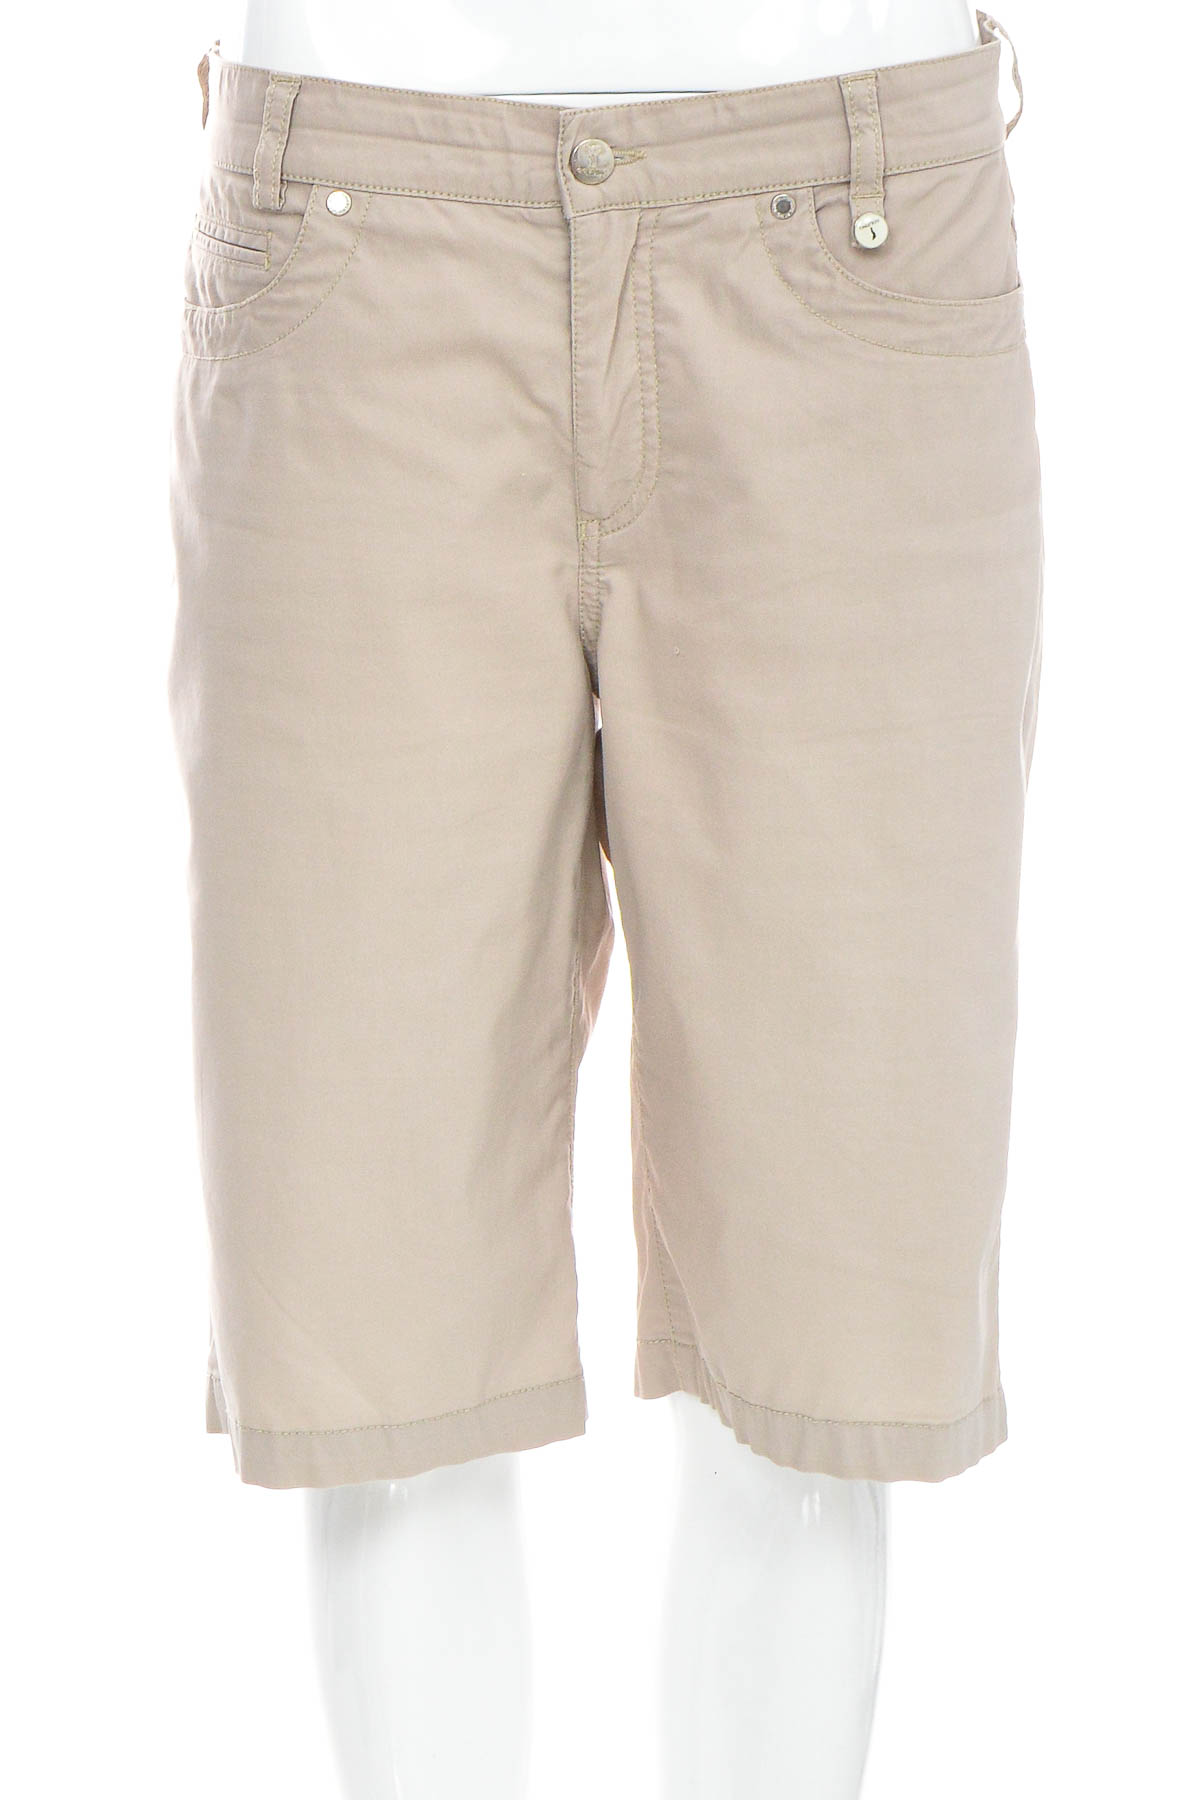 Female shorts - Golfino - 0